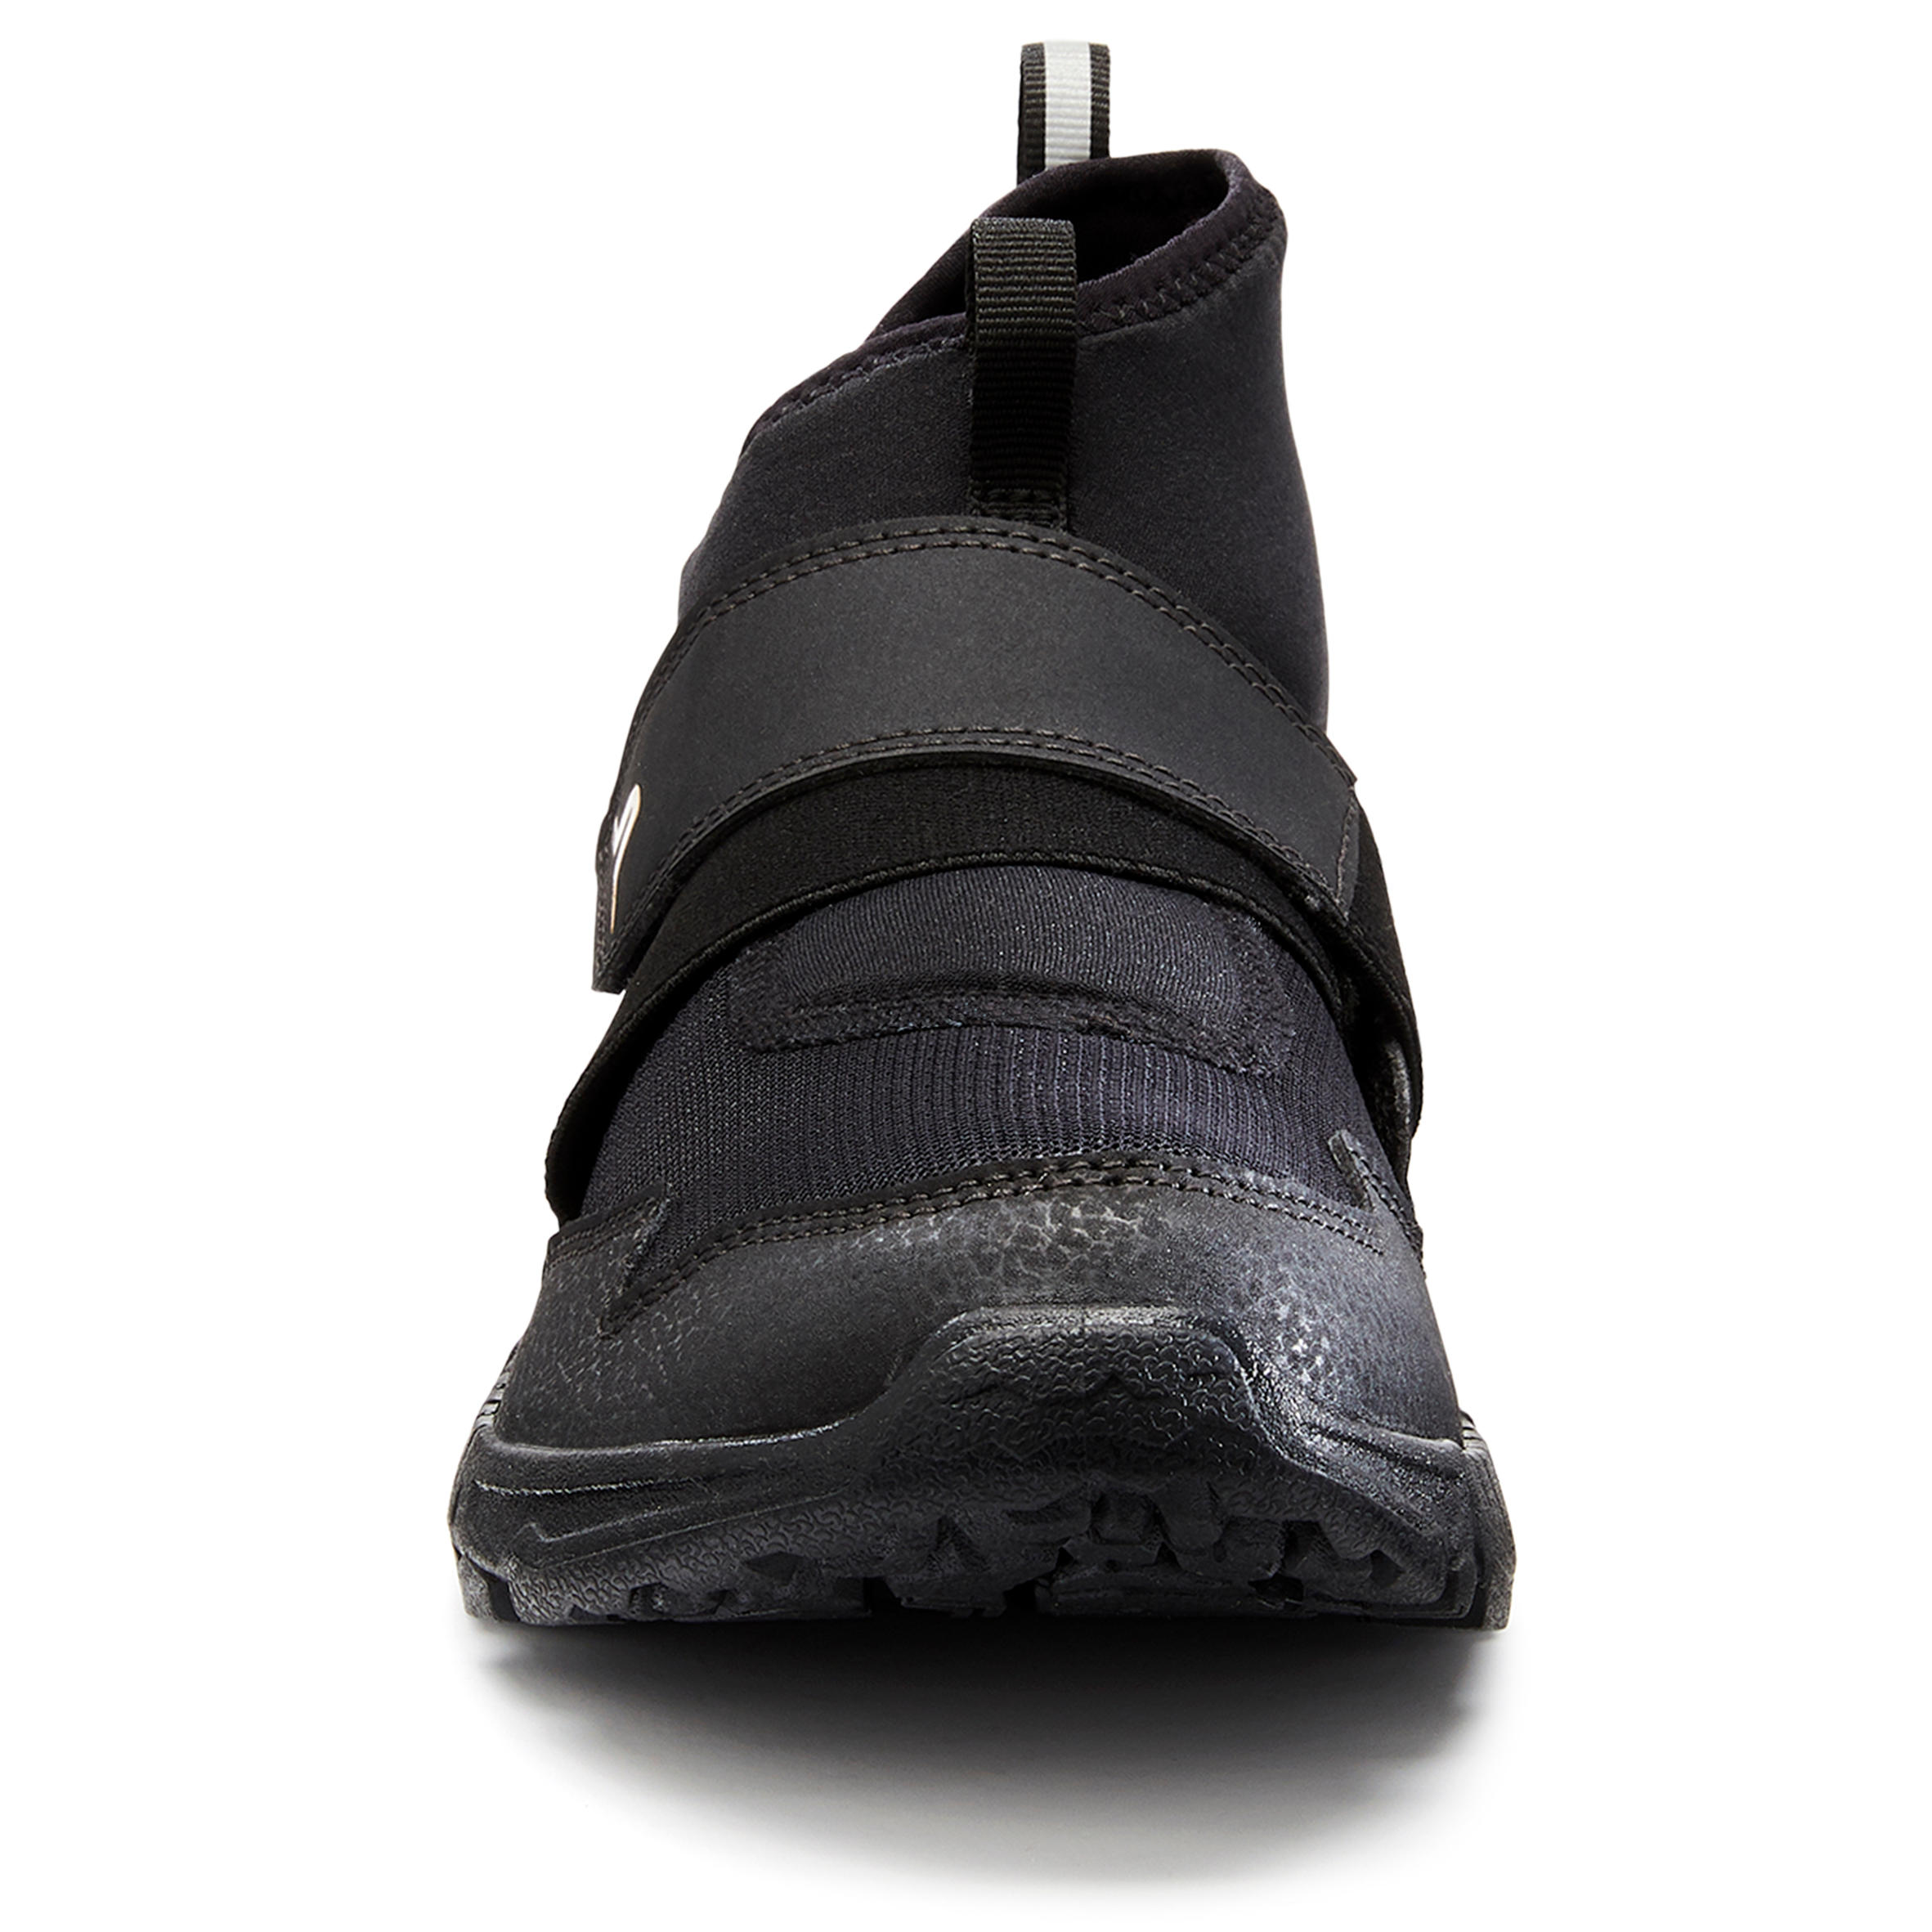 decathlon nordic walking shoes